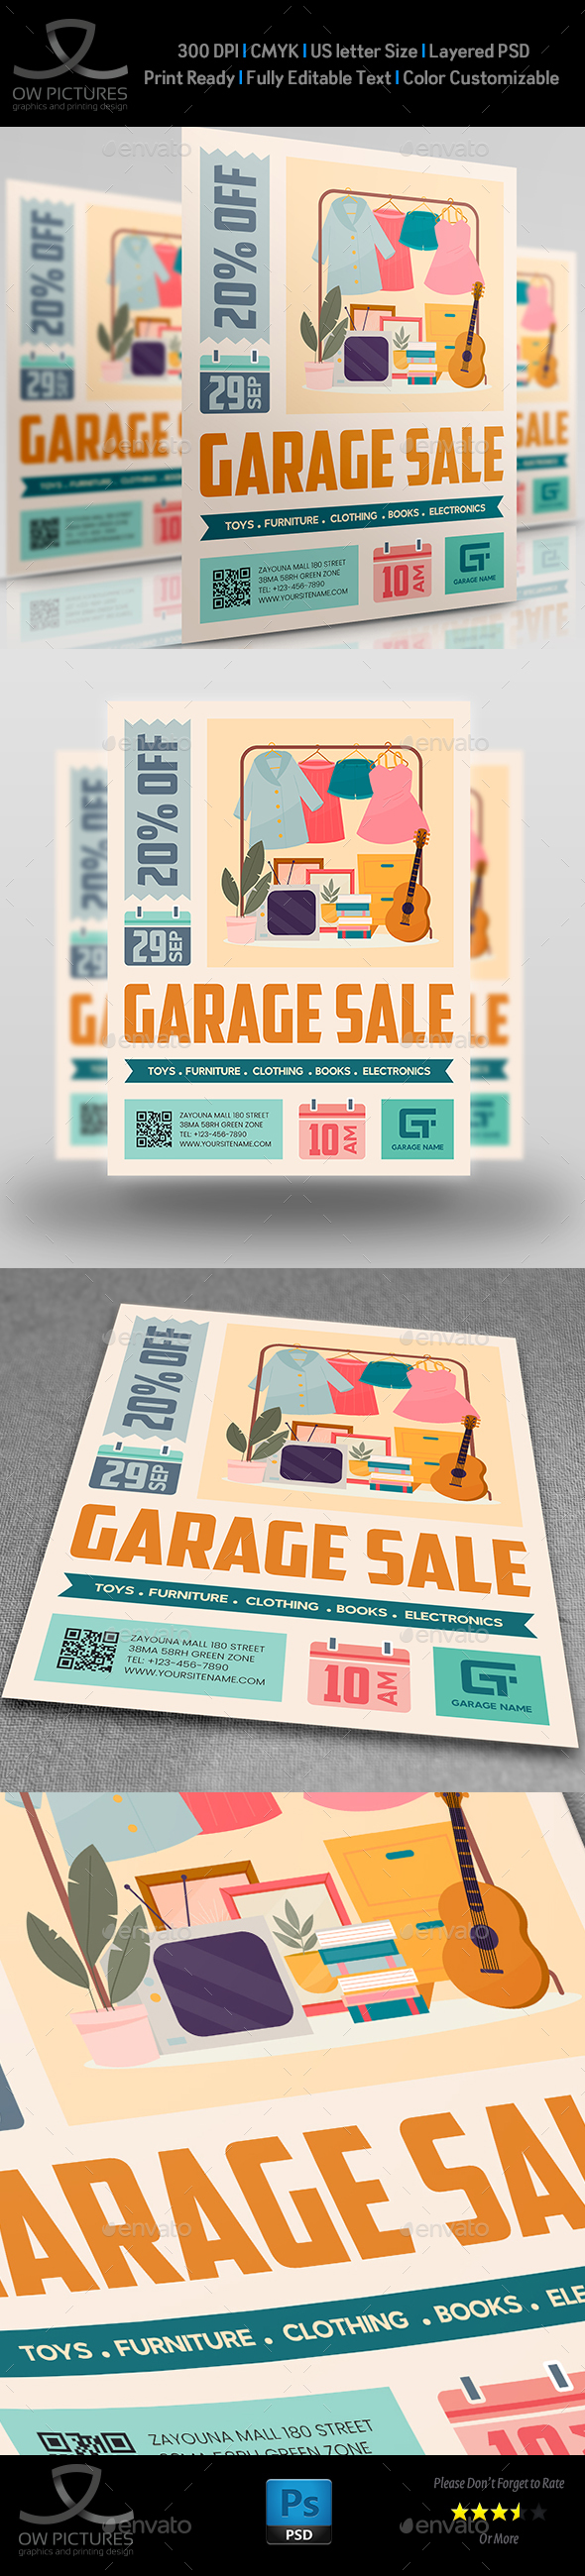 Garage Sales Flyer Template